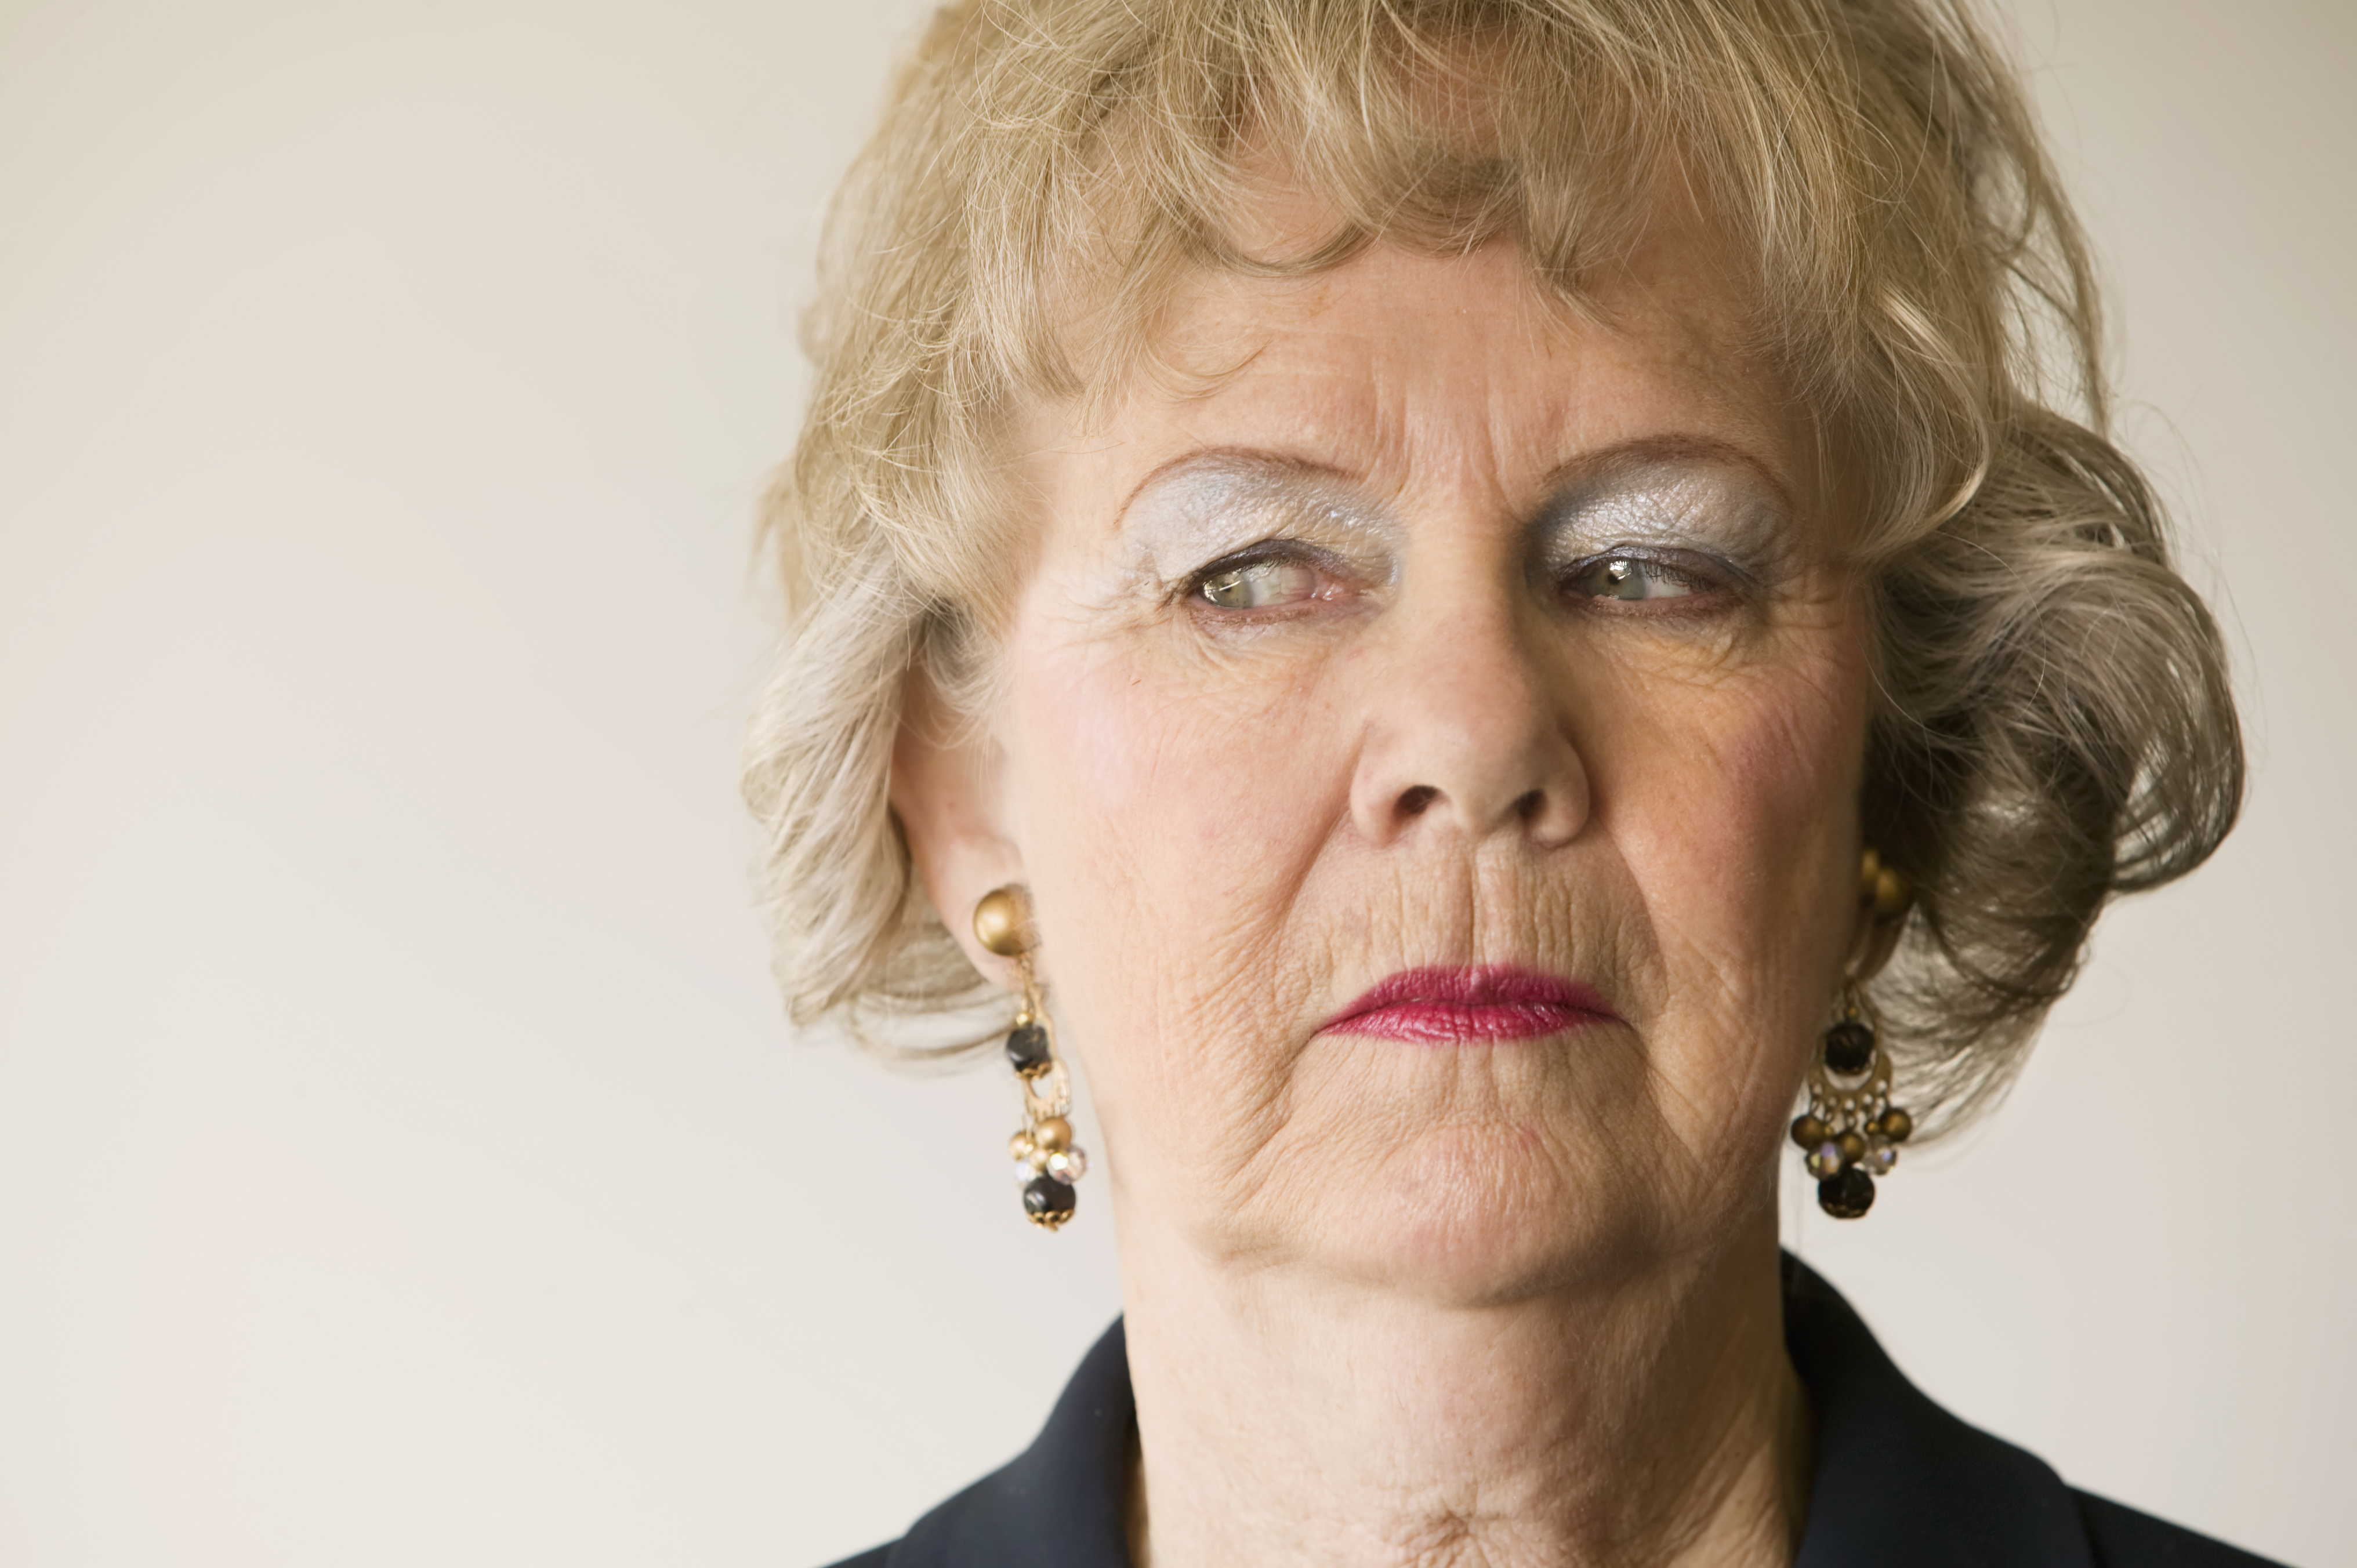 A skeptical elderly woman | Source: Shutterstock